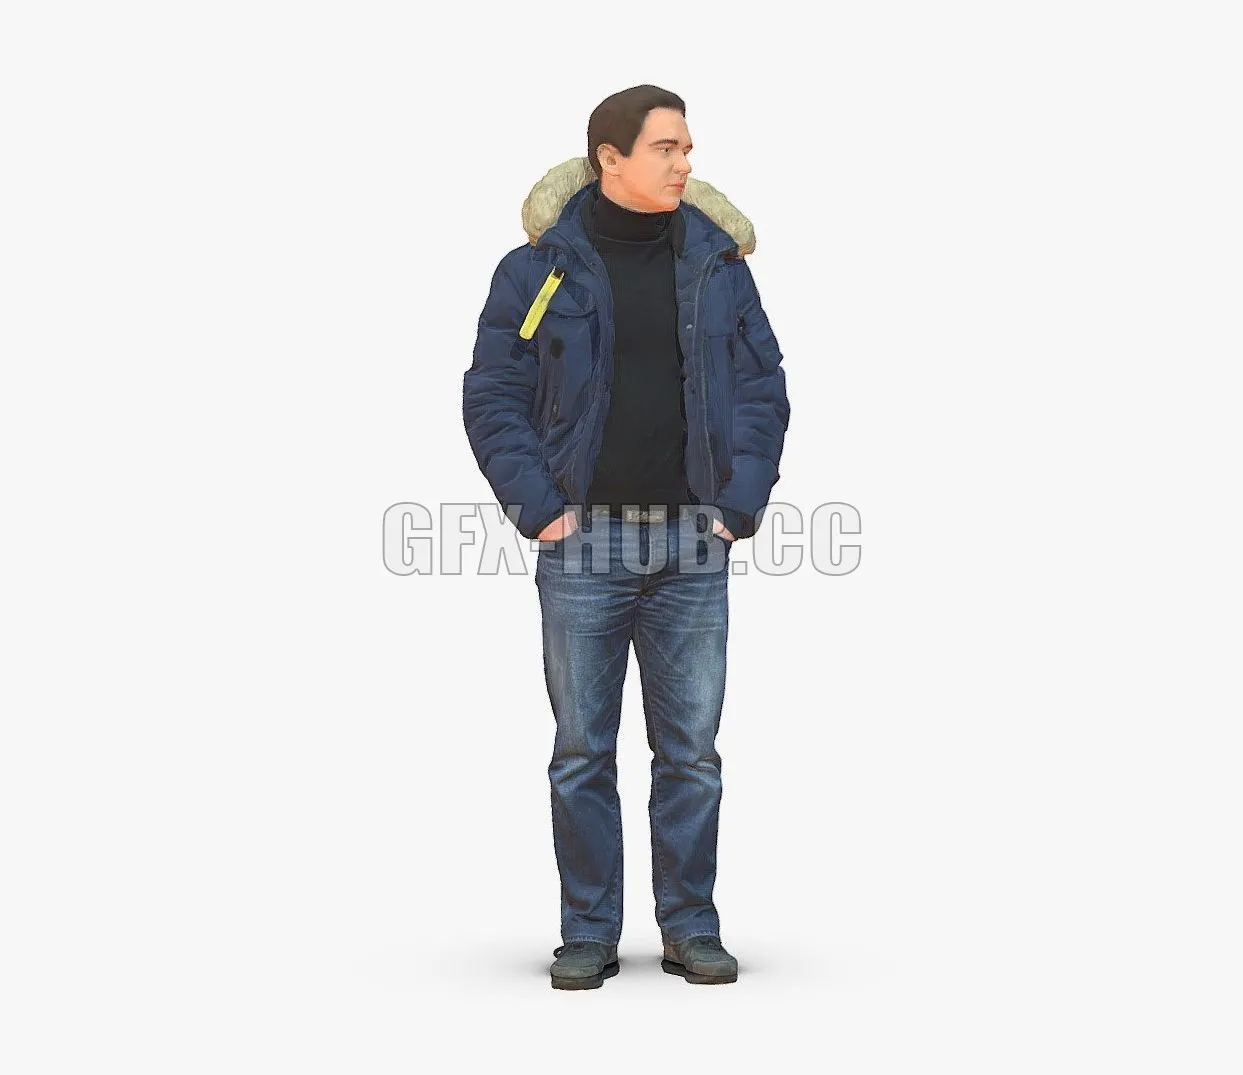 PBR Game 3D Model – Man in a winter jacket pilot